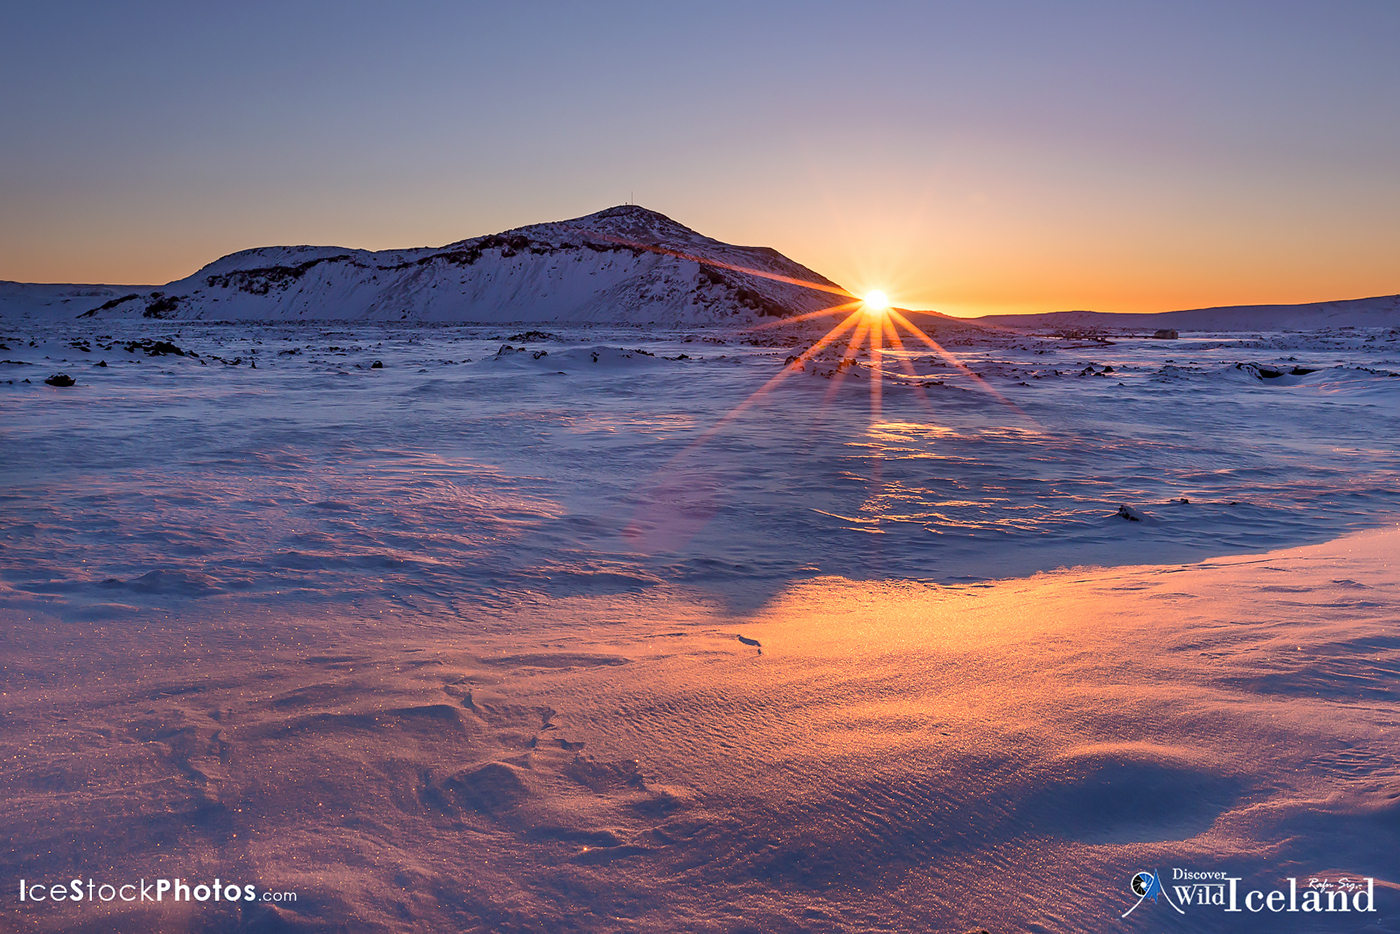 iceland Day Tours sunrice sunset photo tours professional photography professional photographer Rafn